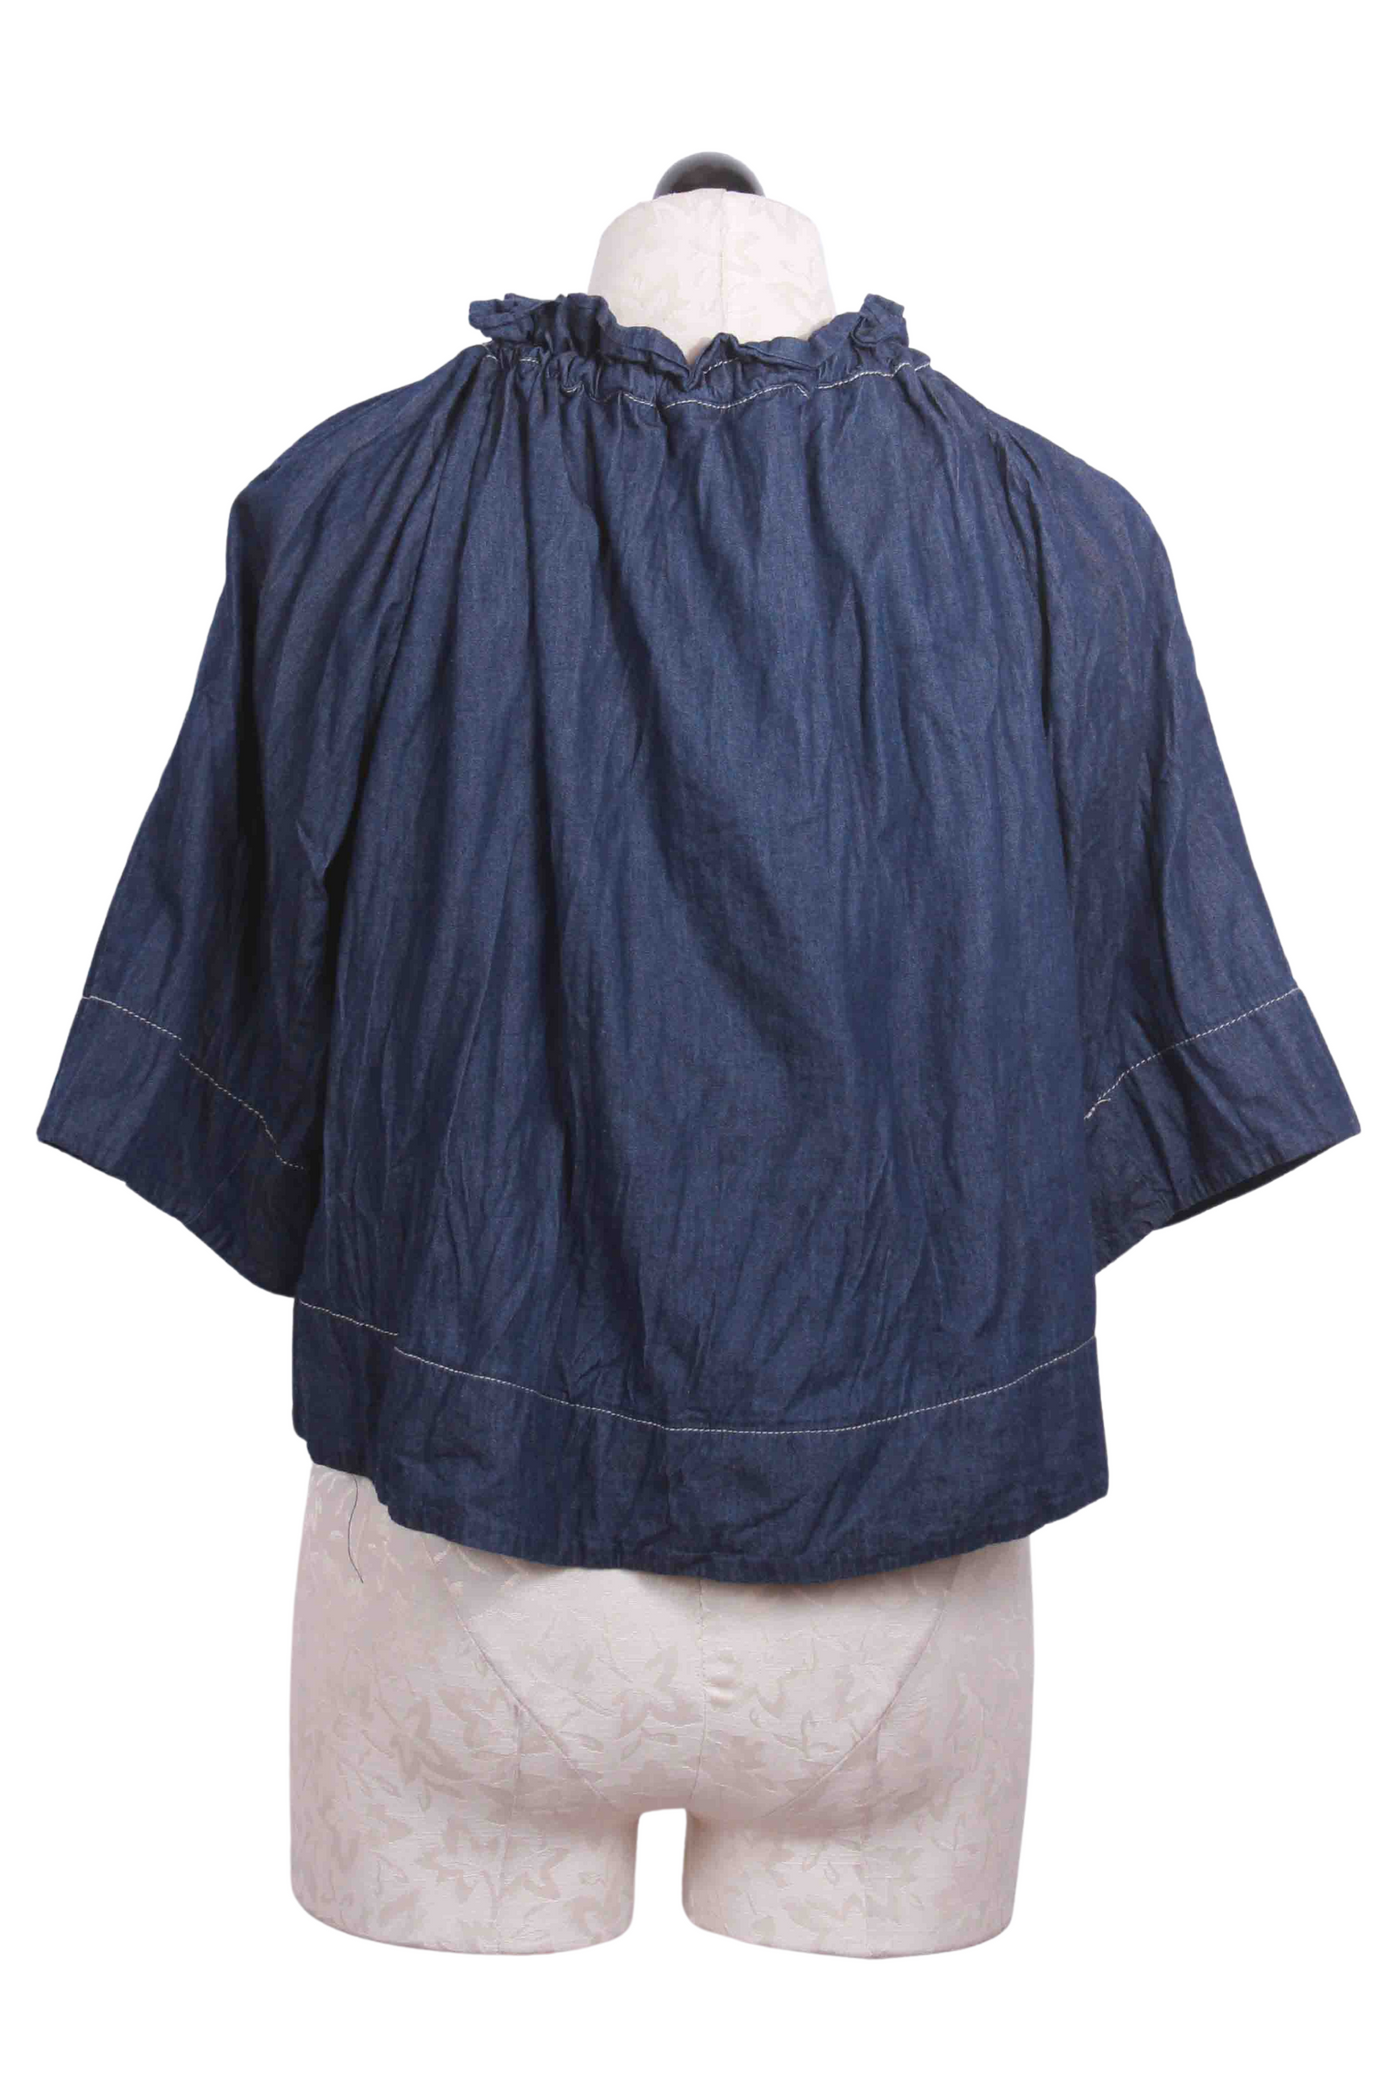 back view of Short Sleeve Drawstring Neck Crinkle Denim Jacket by Ozai N Ku